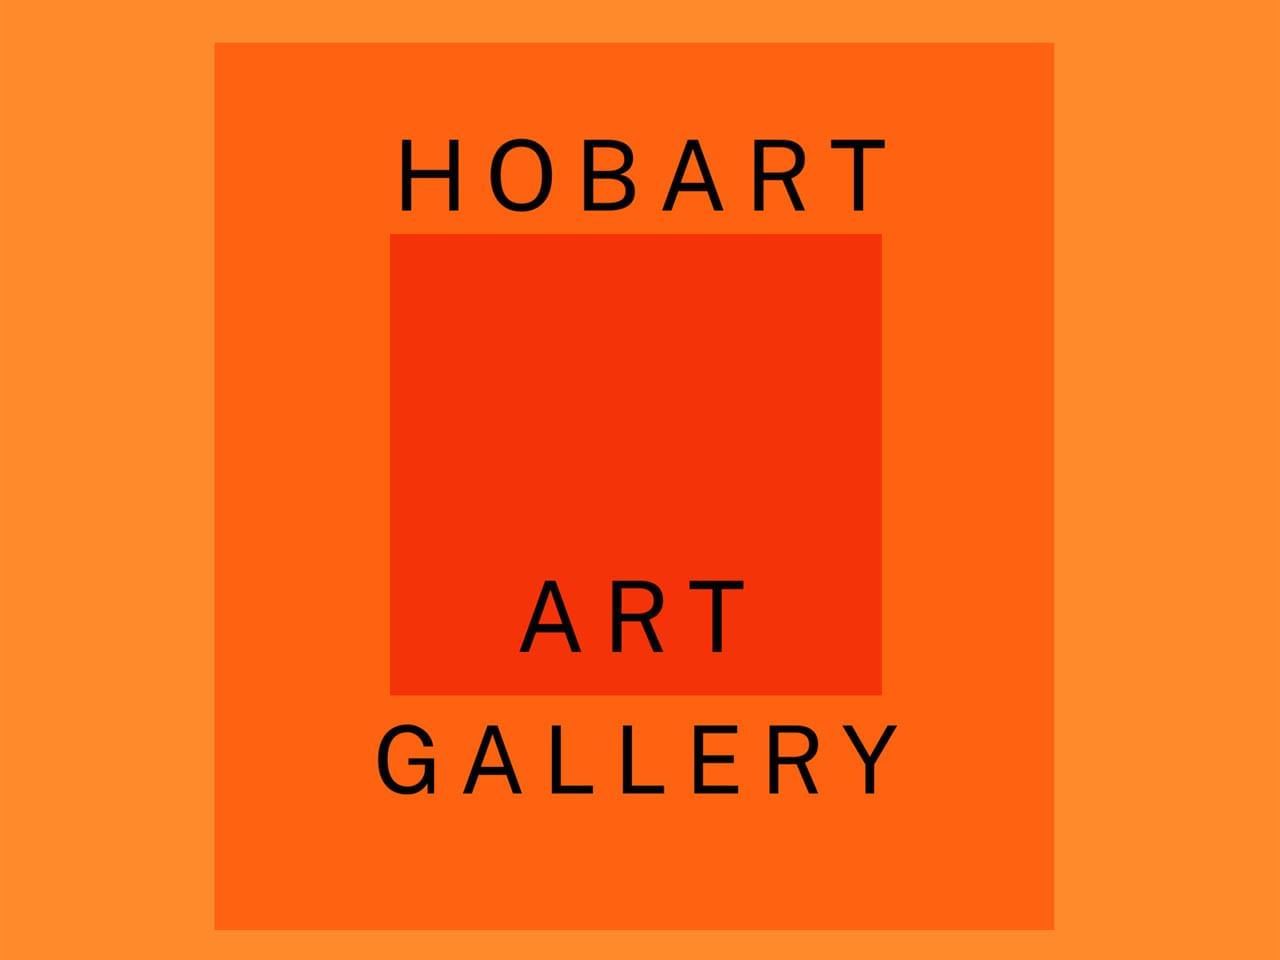 Hobart Art Gallery Logo used at Hotel Grand Chancellor Hobart